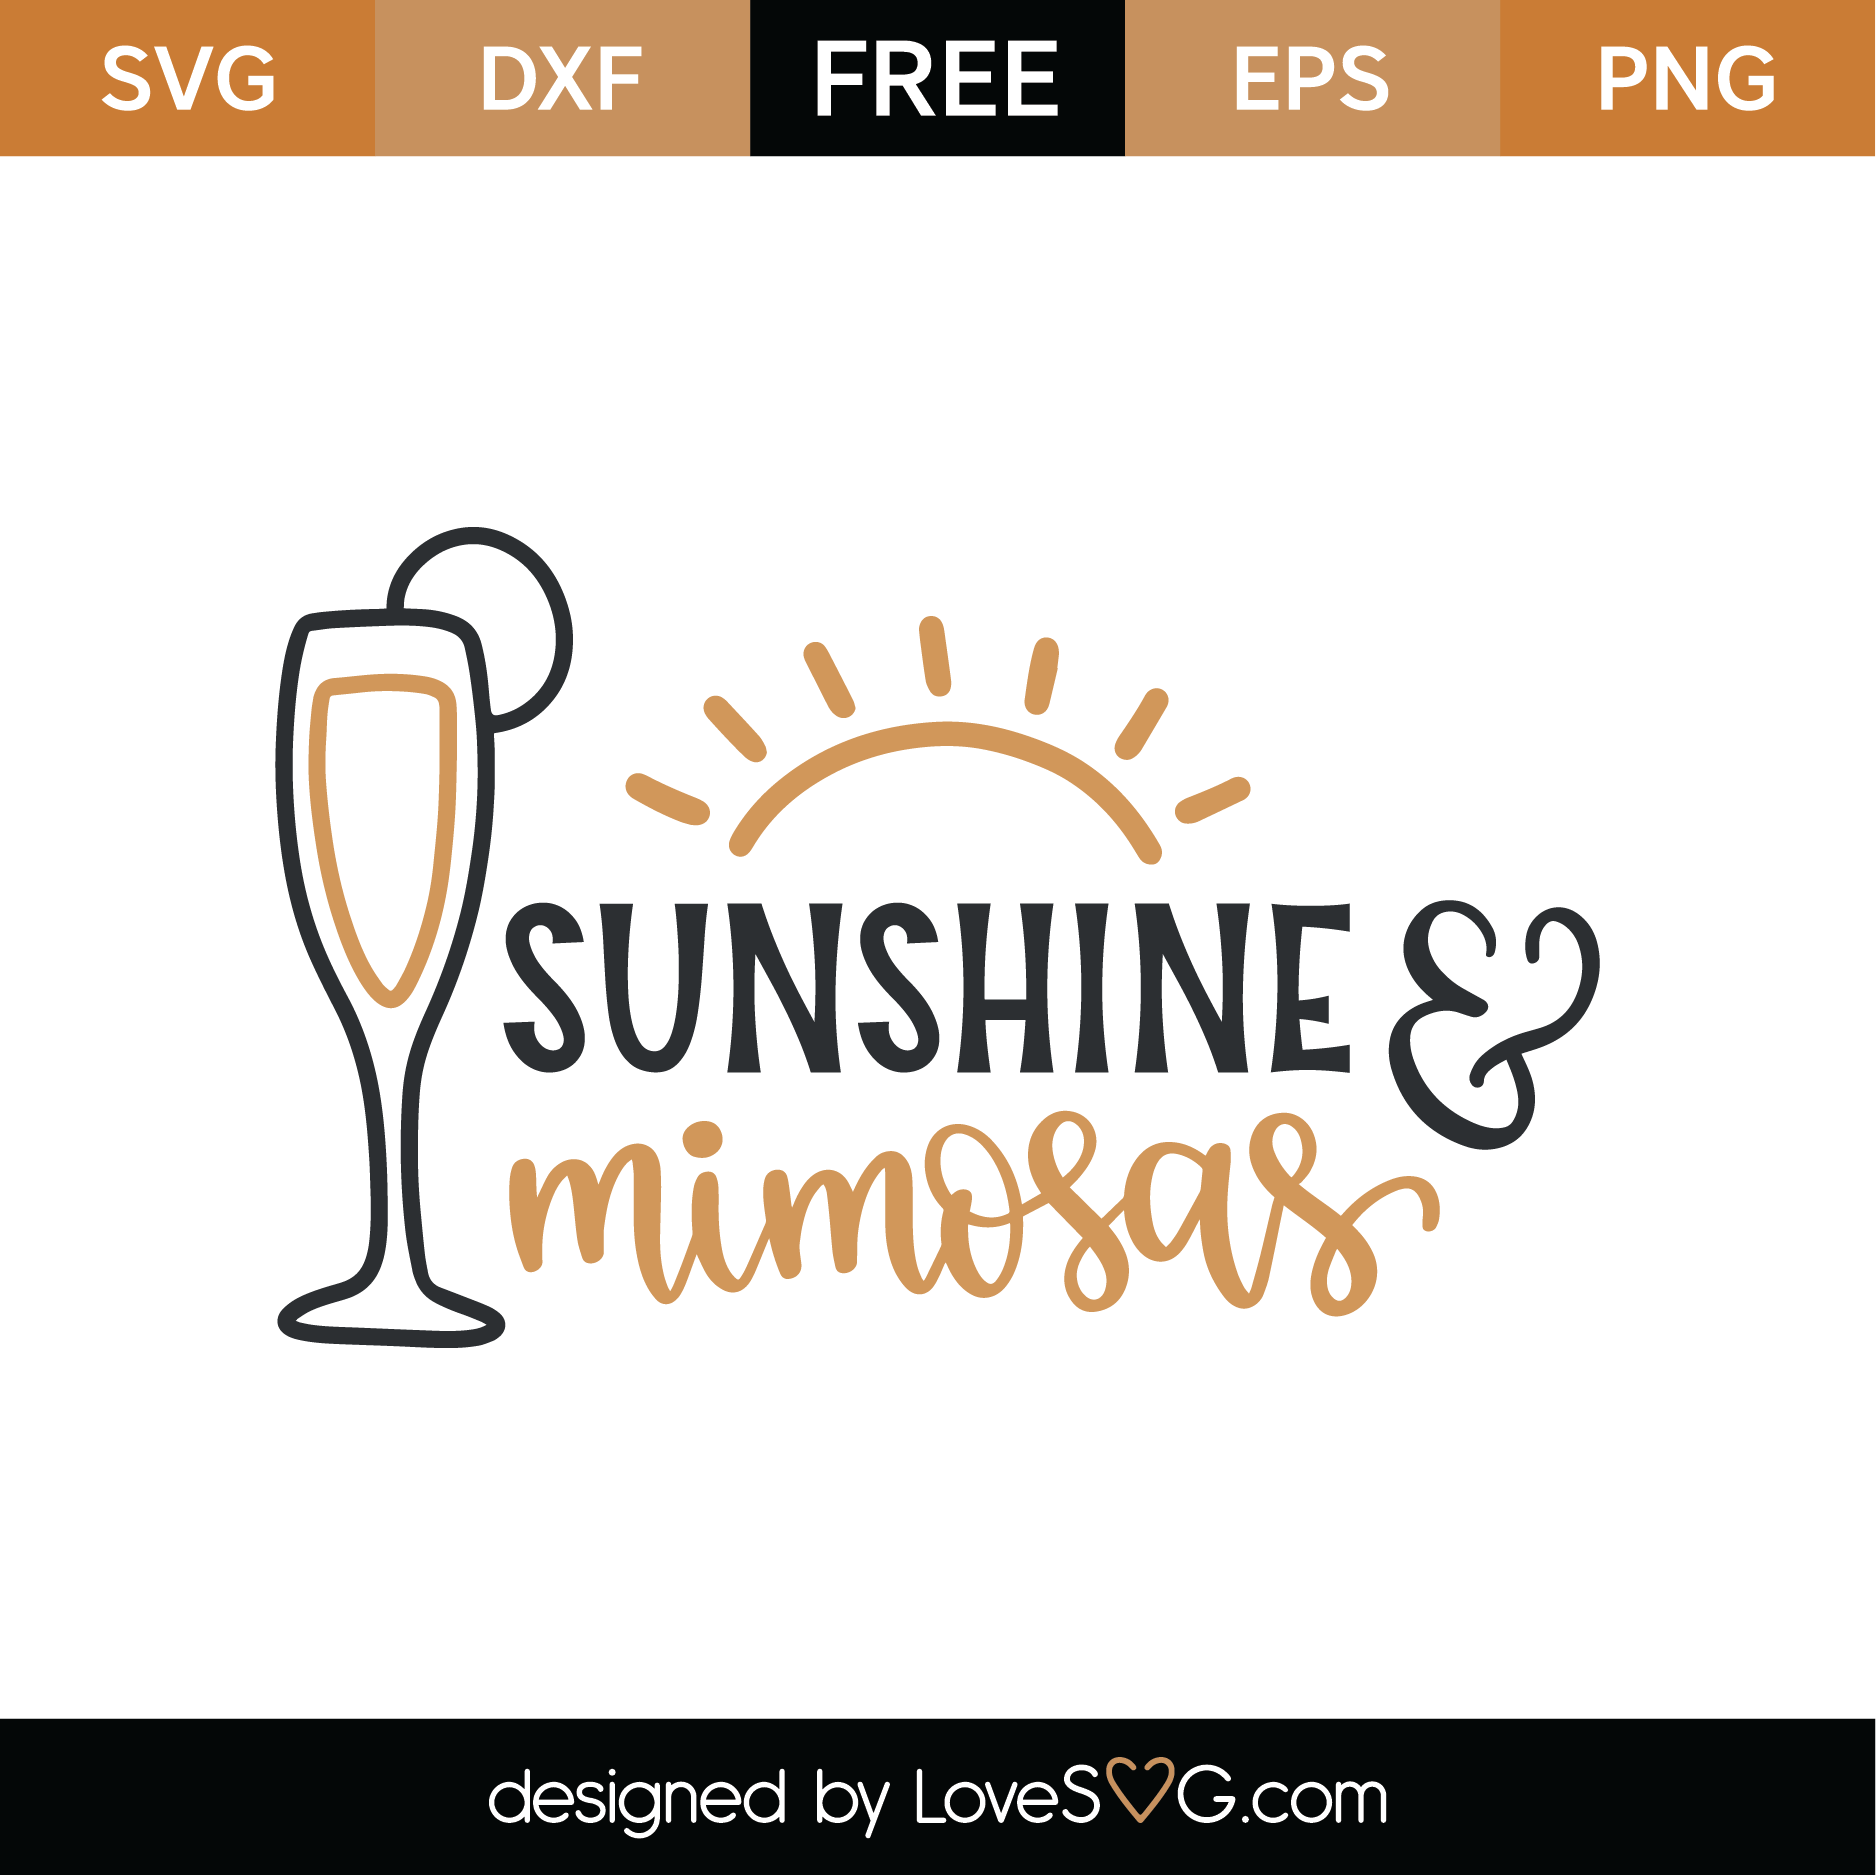 Download Free Sunshine And Mimosas SVG Cut File | Lovesvg.com